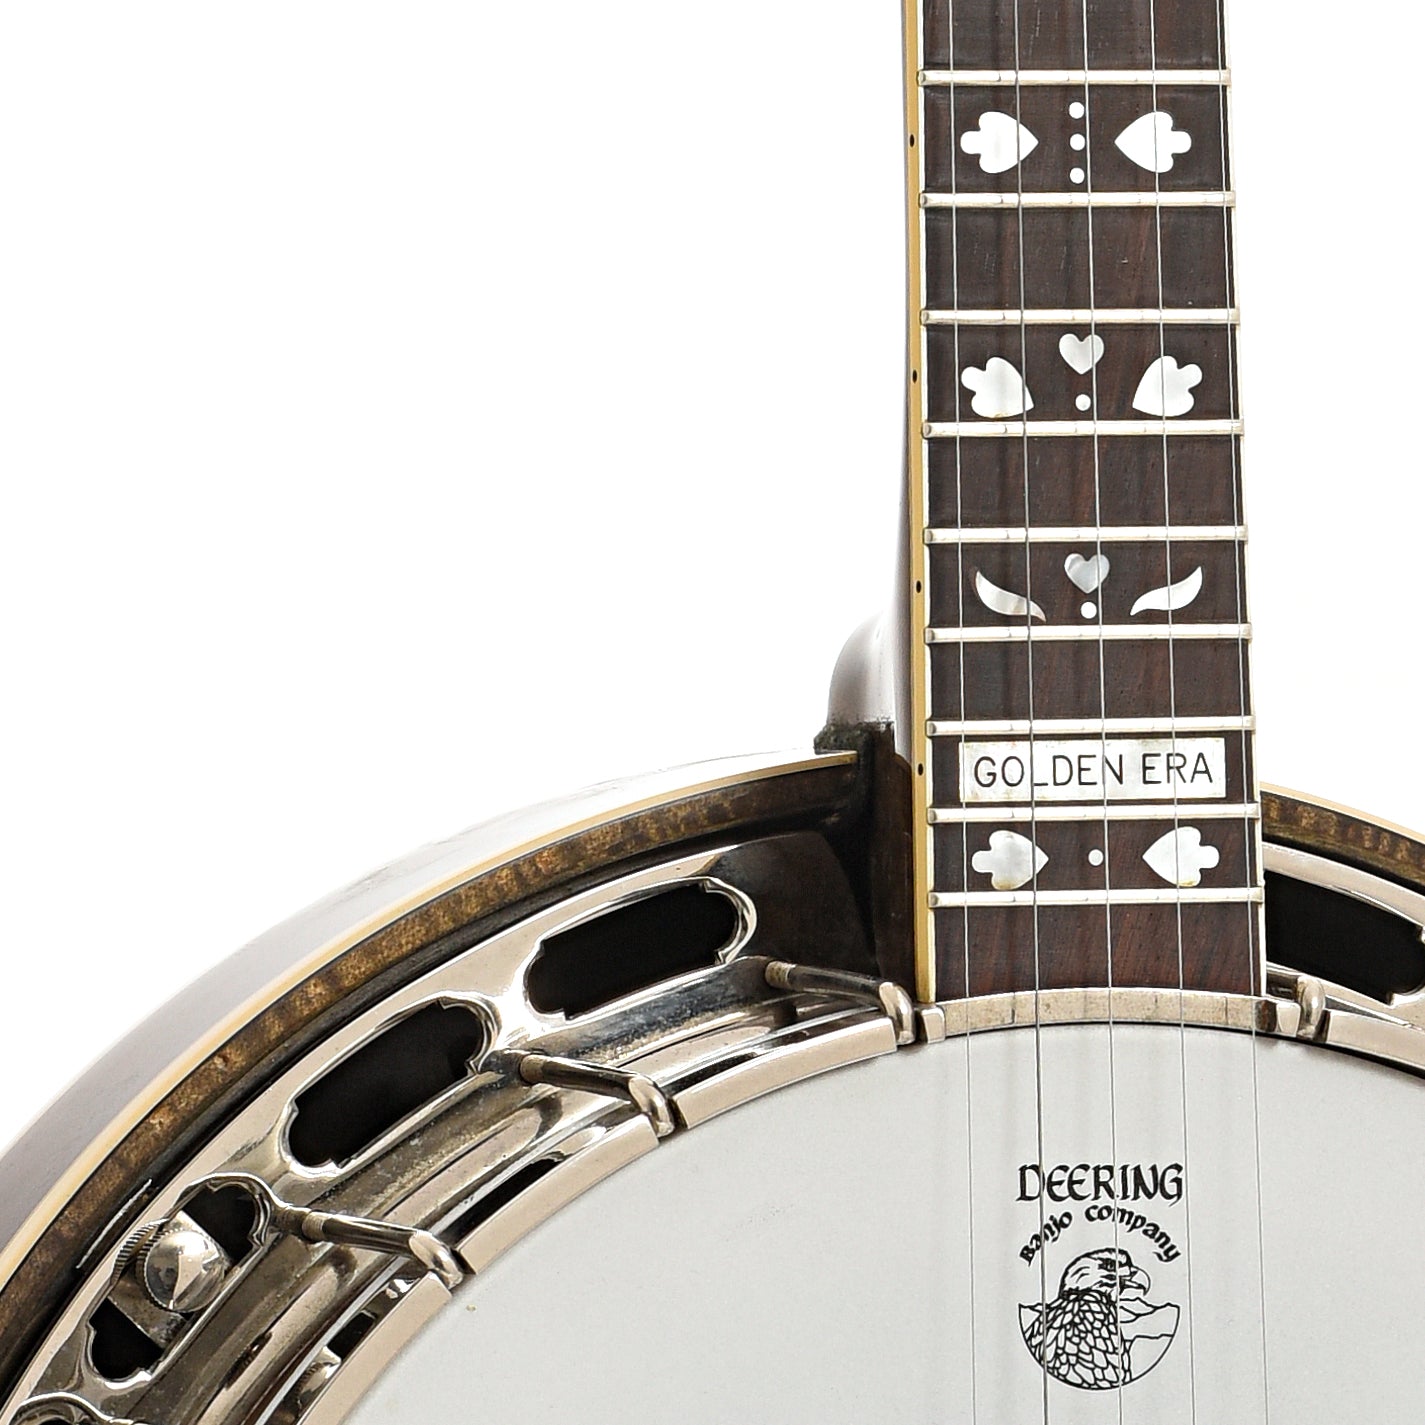 Front Body and neck join of  Deering Golden Era Resonator Banjo (1998)